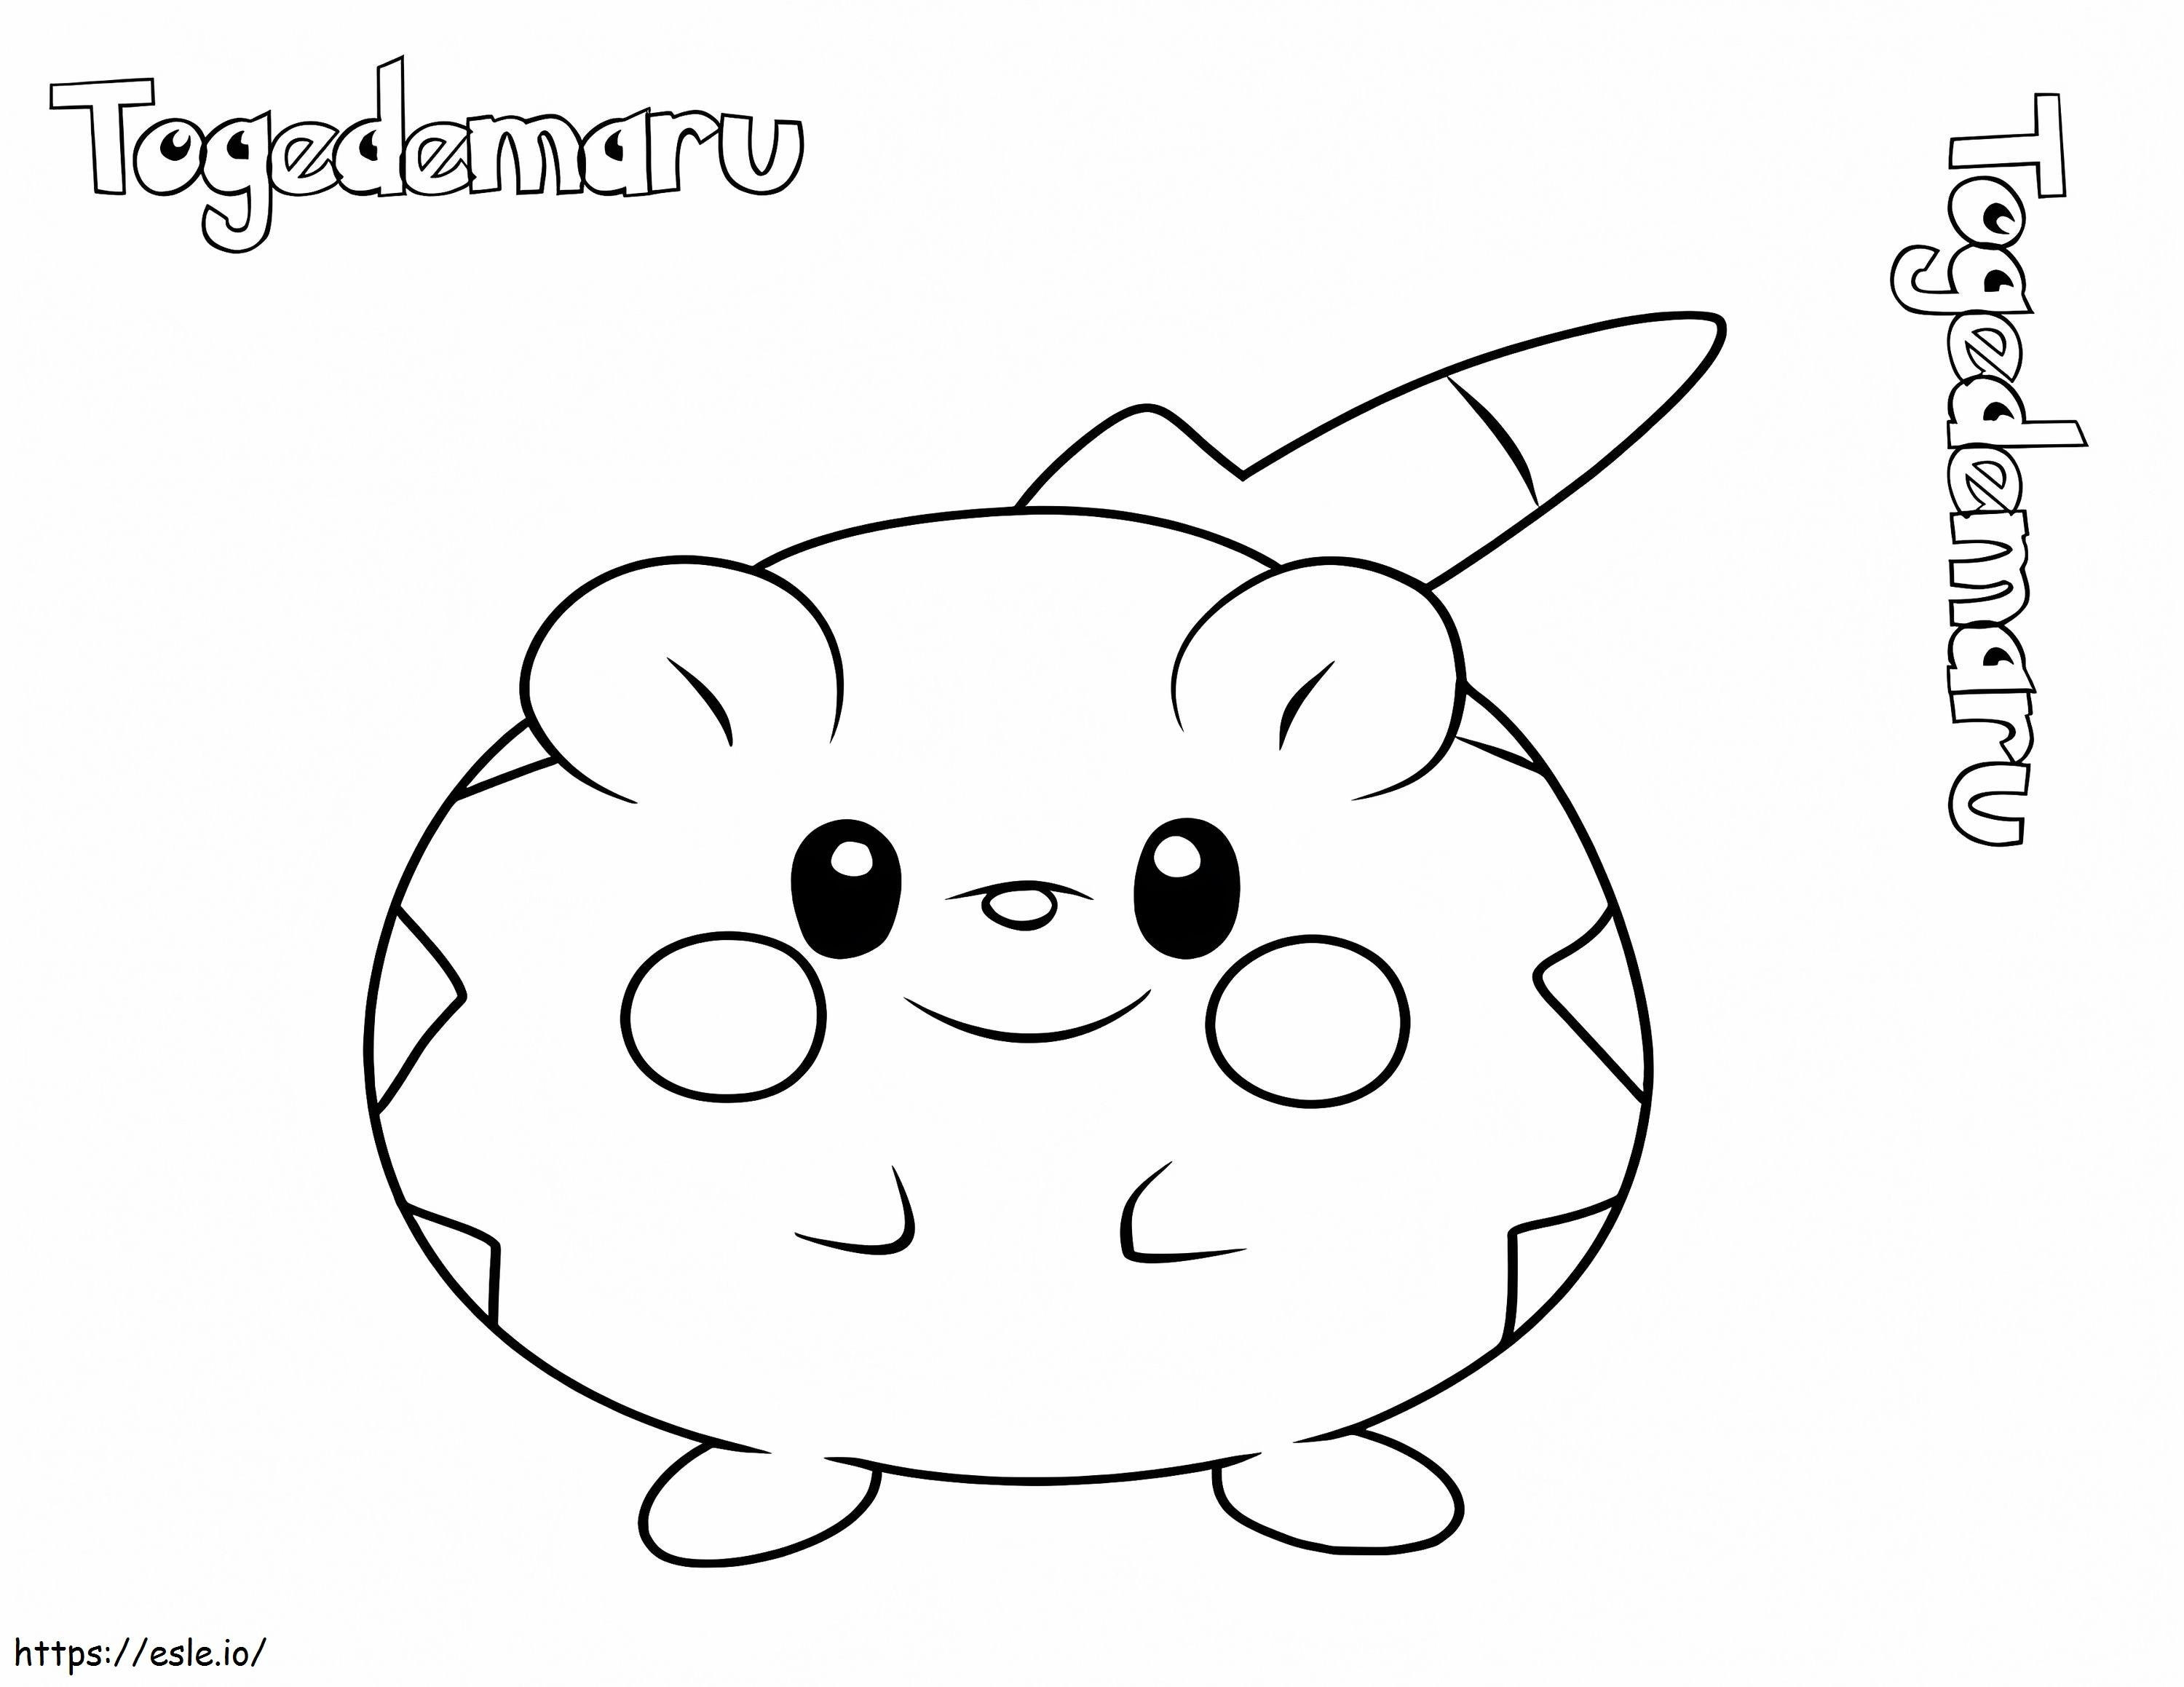 Togedemaru Pokemon 2 coloring page